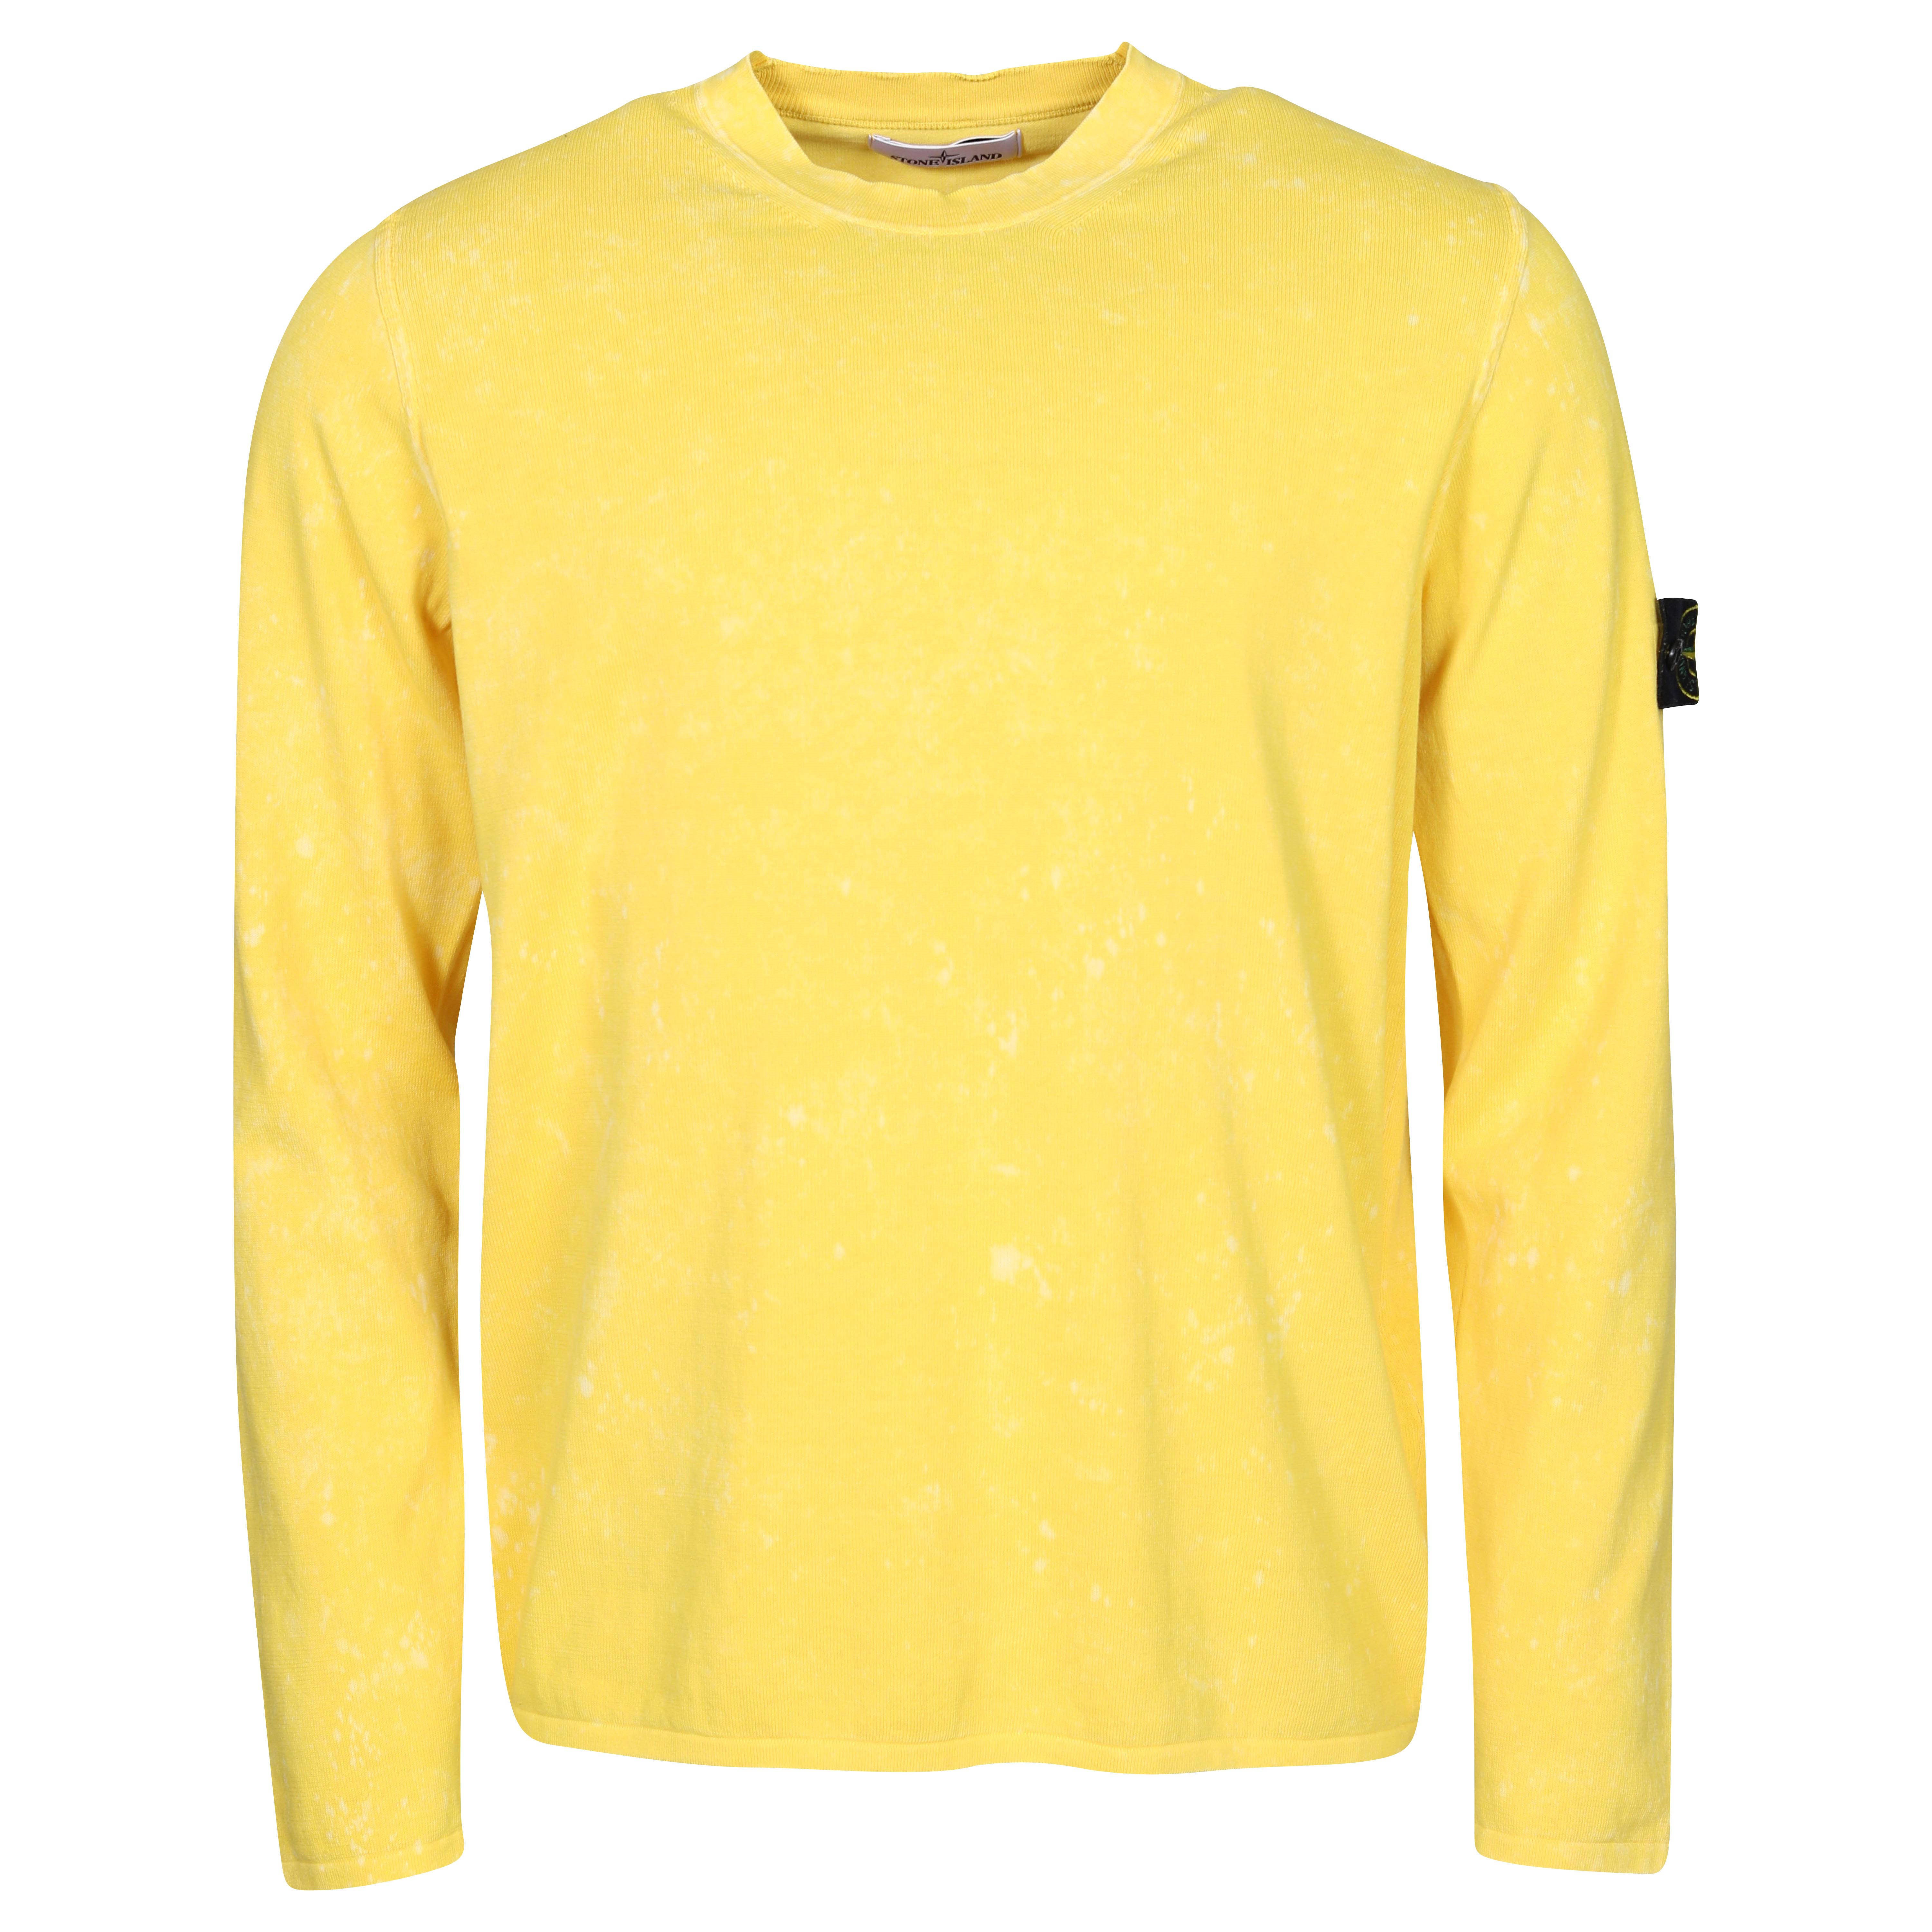 Stone Island Knit Sweater in Yellow